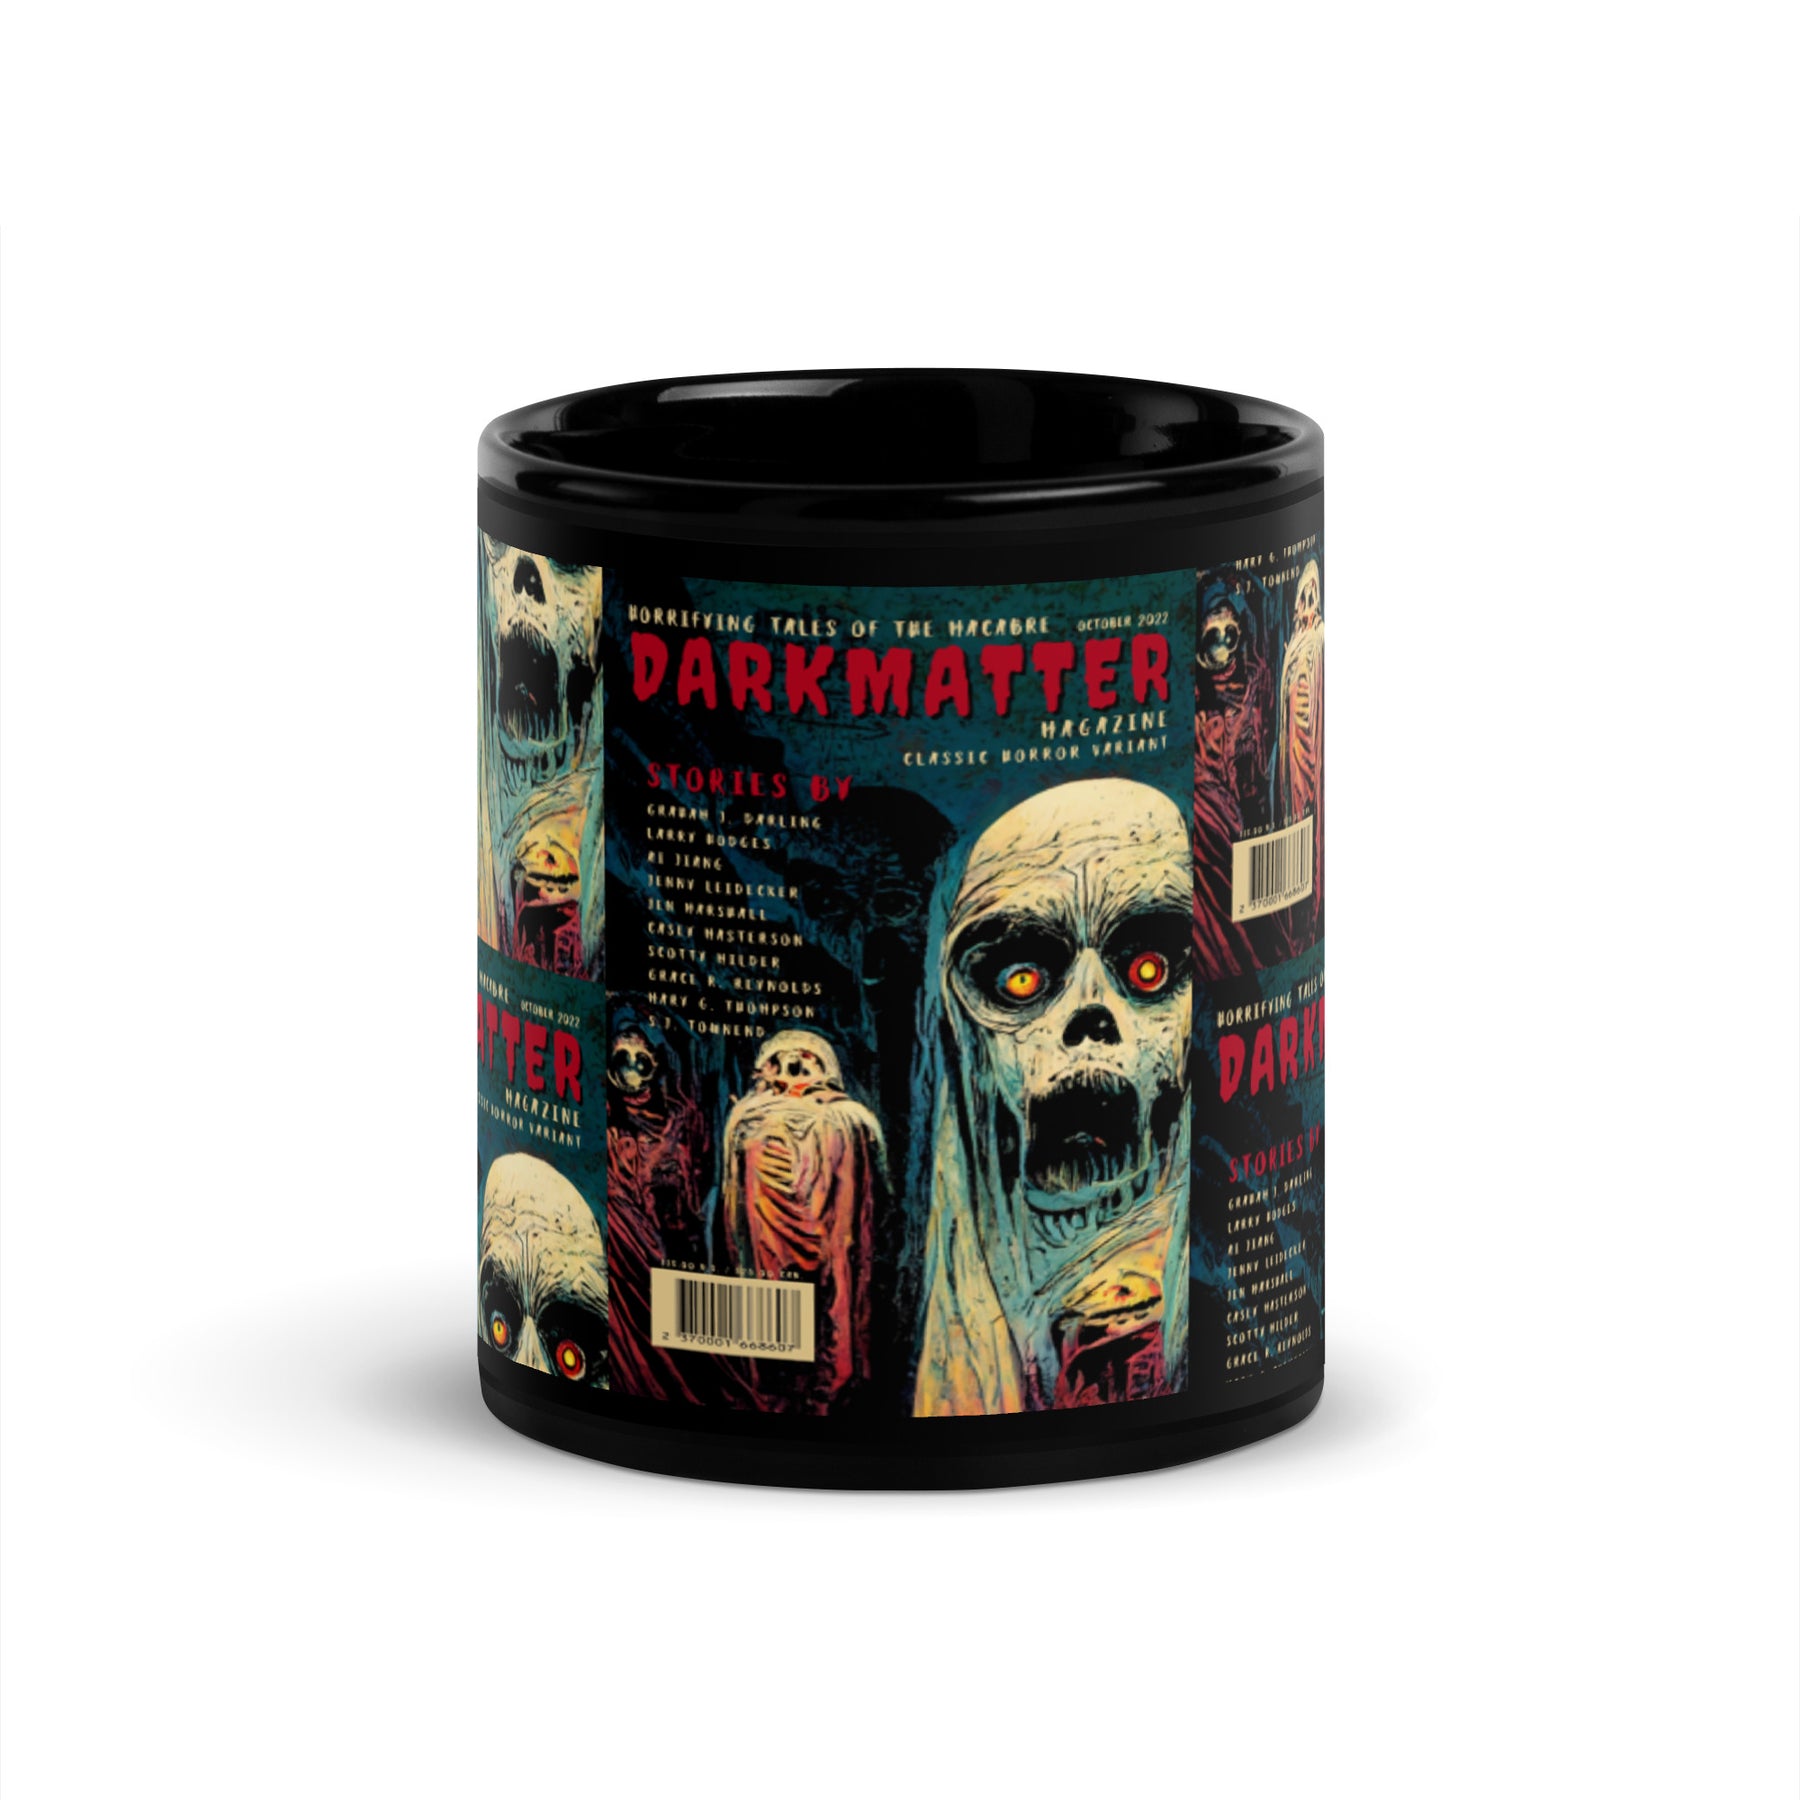 "Dark Matter Magazine Classic Horror Variant" 11oz Mug